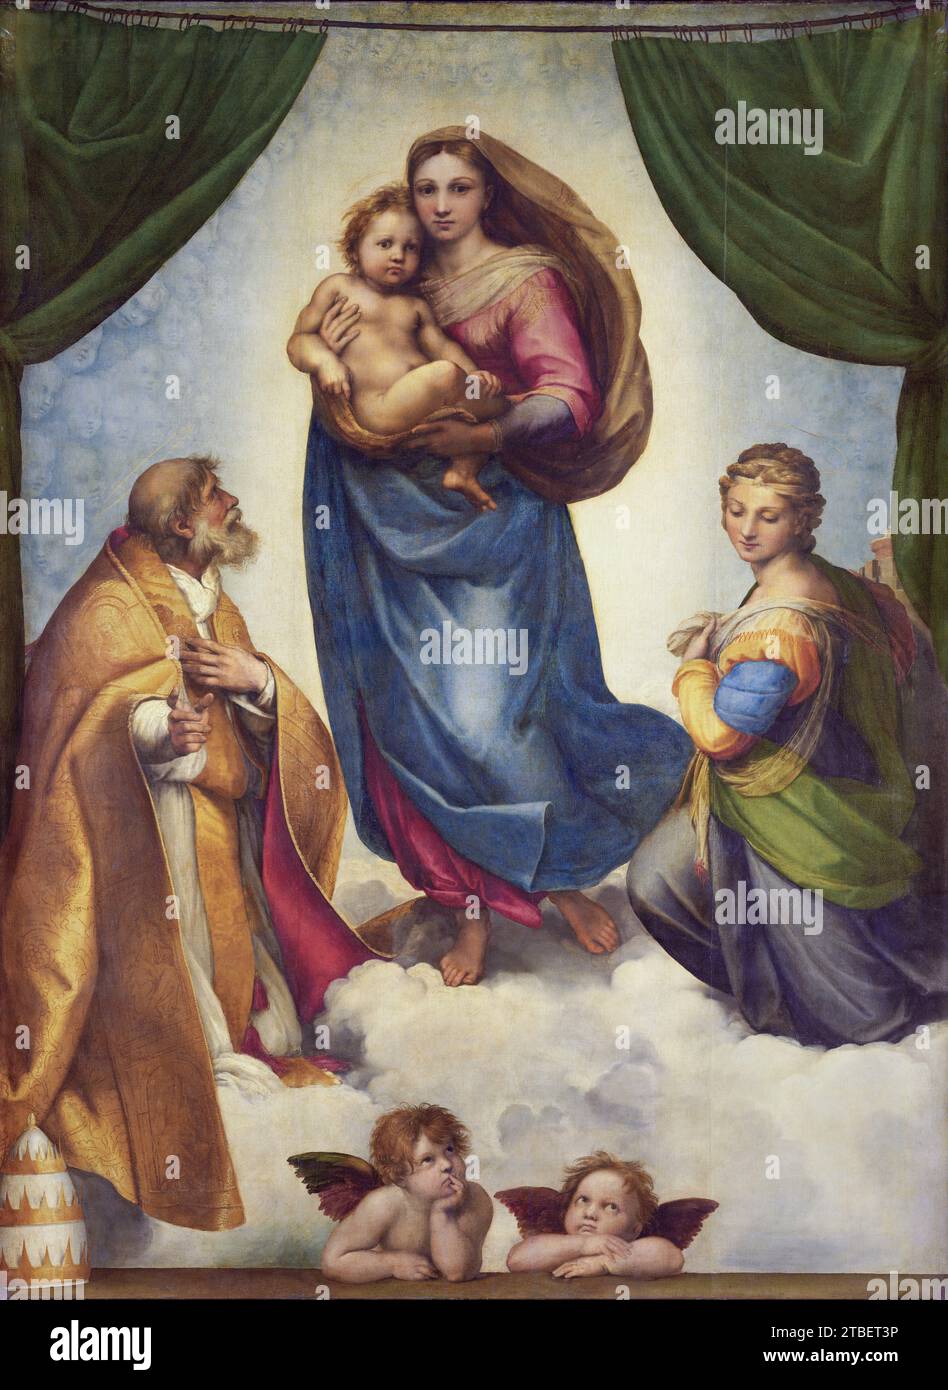 Raphael - Rafaello Sanzio - Sixtinische Madonna - Madonna Di San Sisto, 1513, Öl auf Leinwand, Dresden, Deutschland Stockfoto